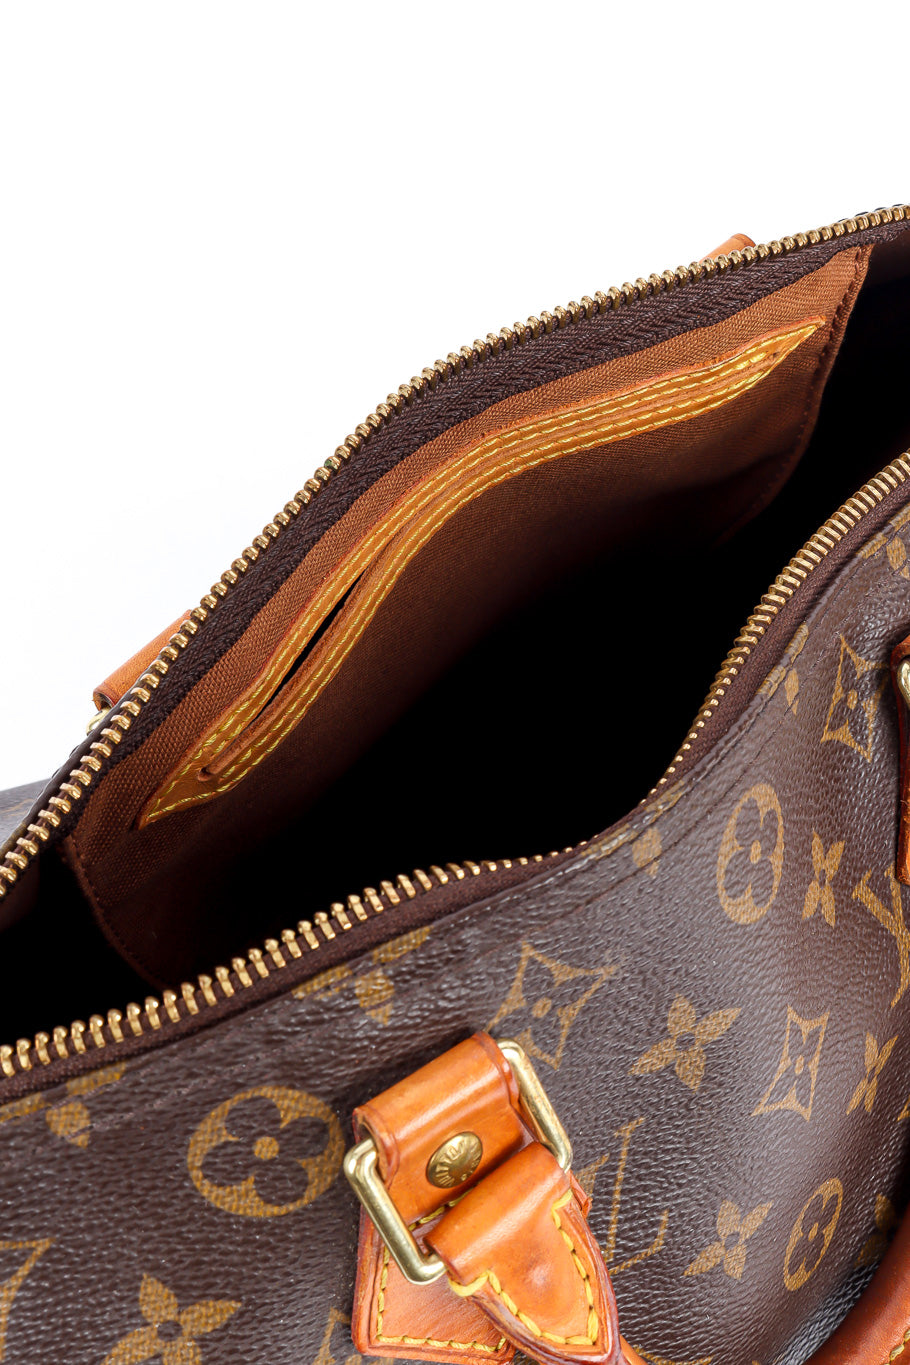 Louis Vuitton classic monogram speedy 30 bag inside pocket @recessla